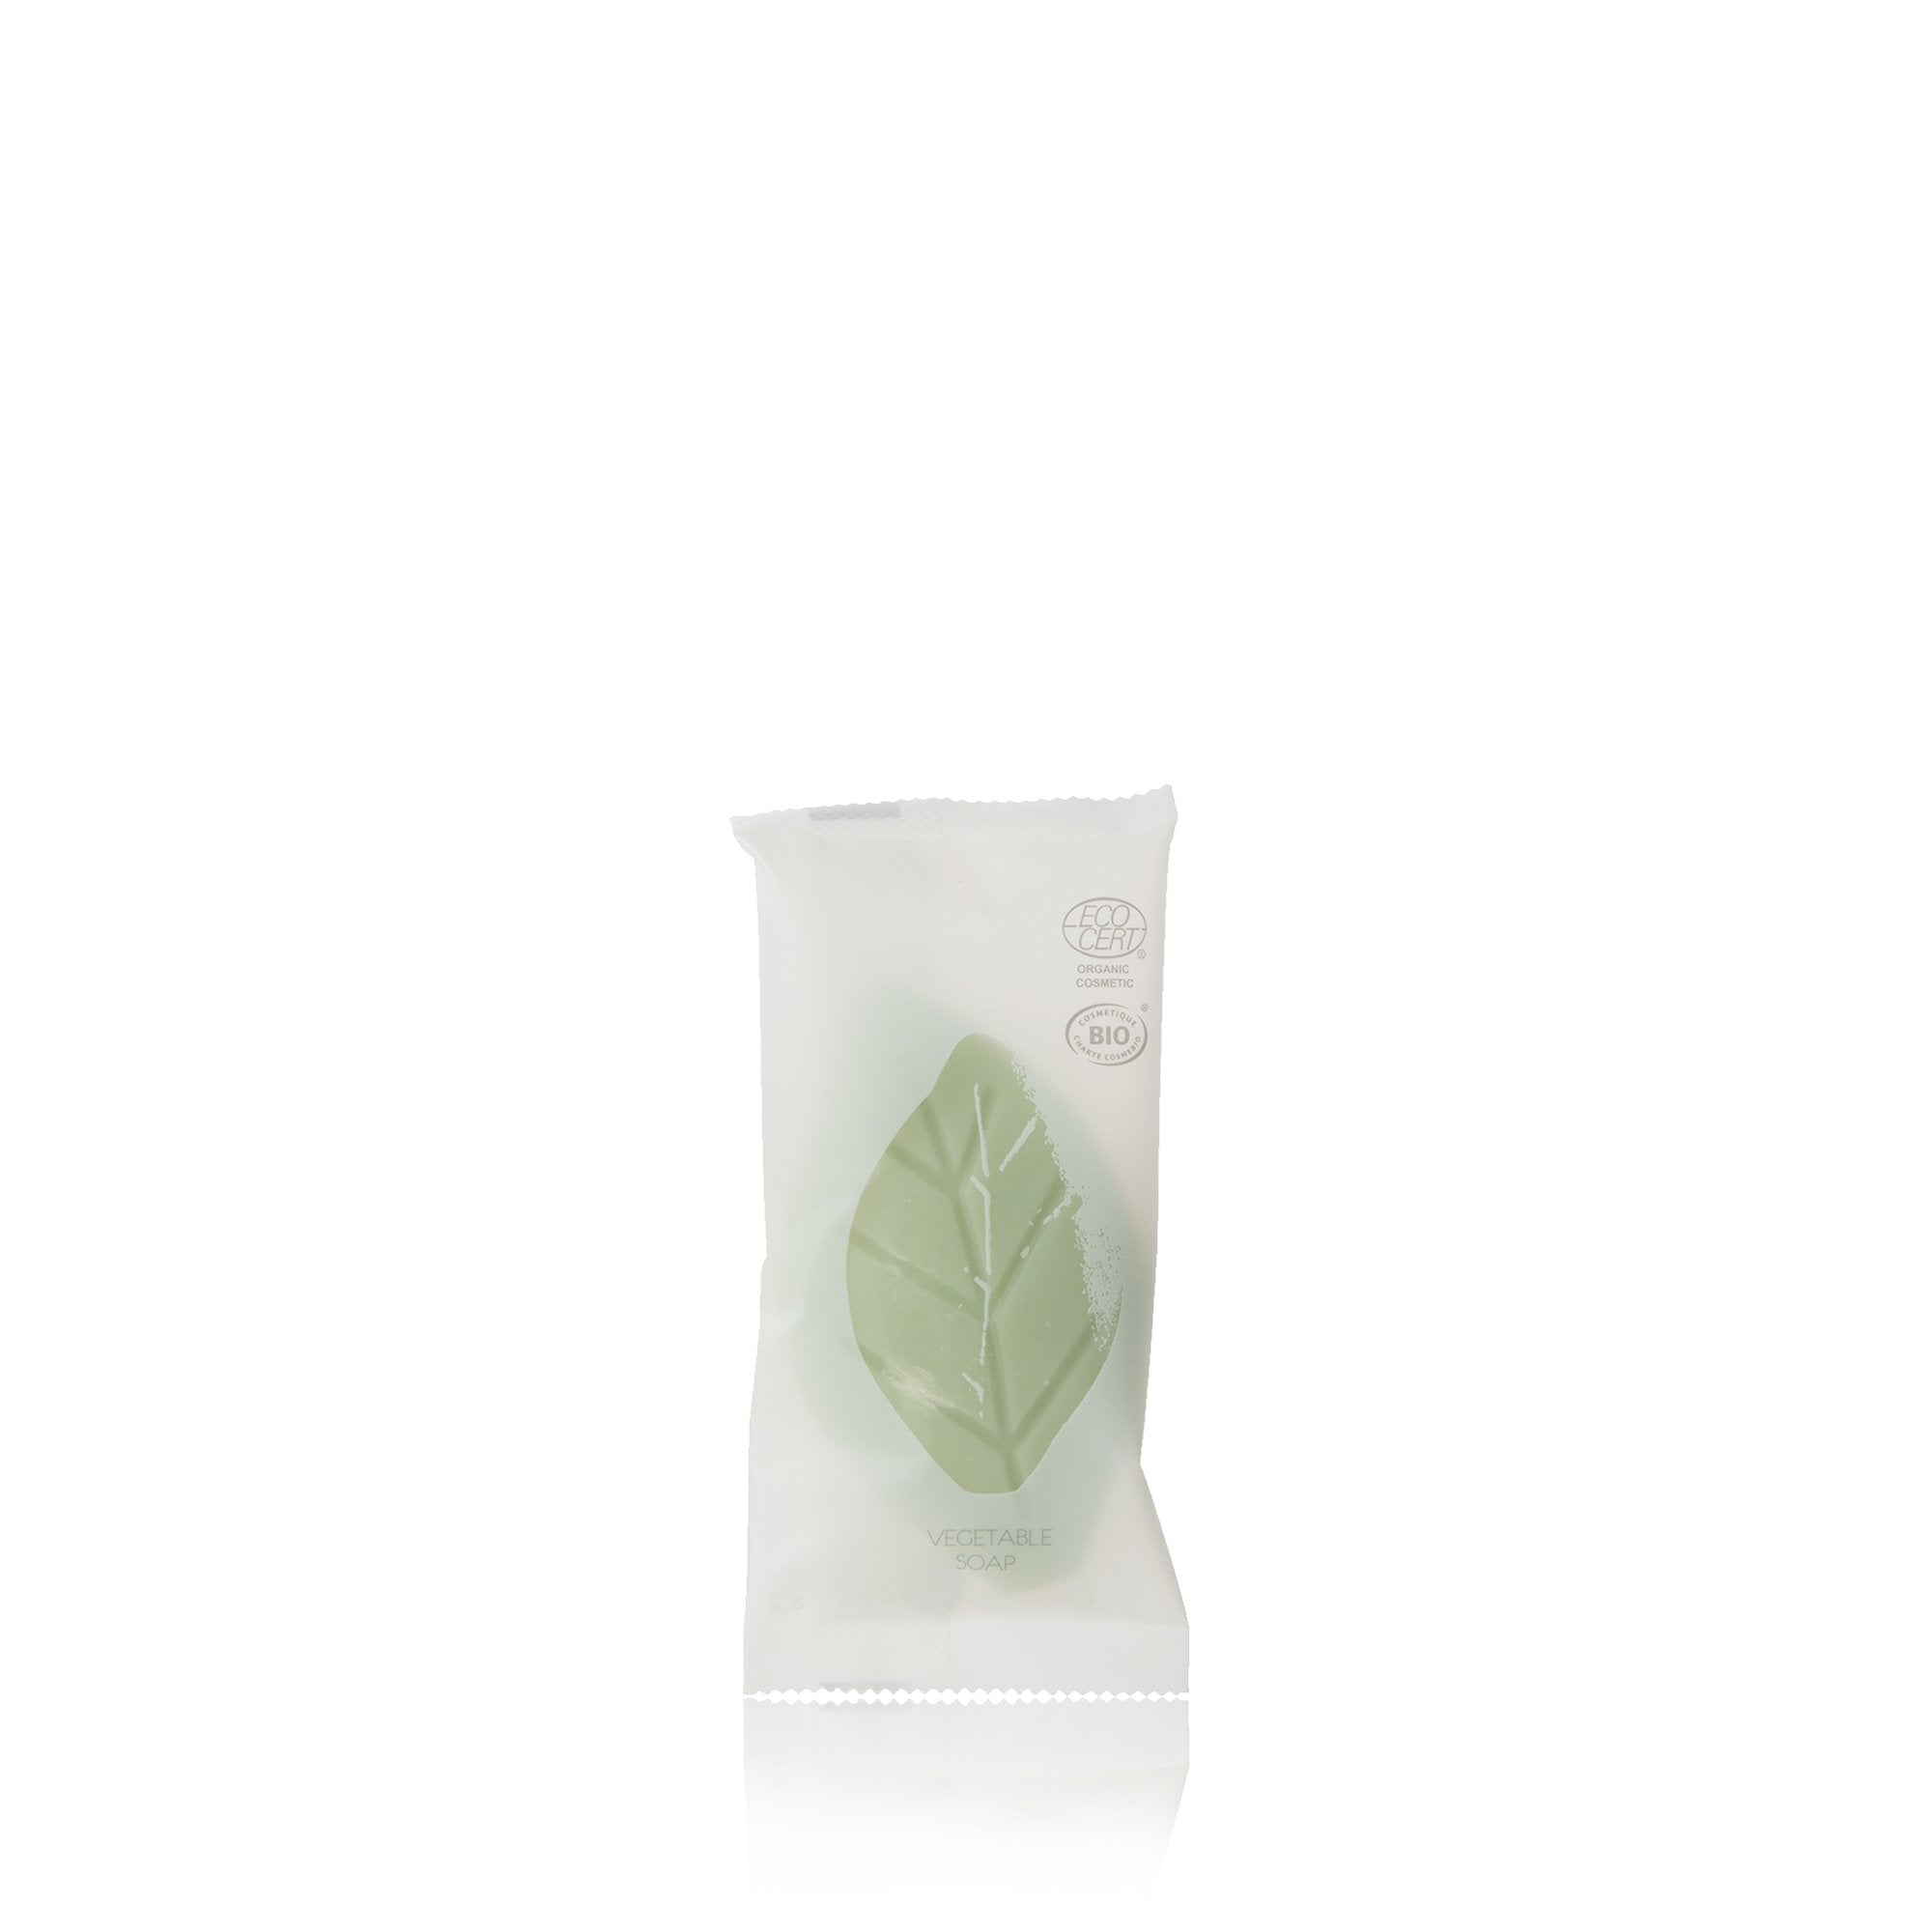 Osmè Organic Certified Leaf Shaped Soap (35 g)